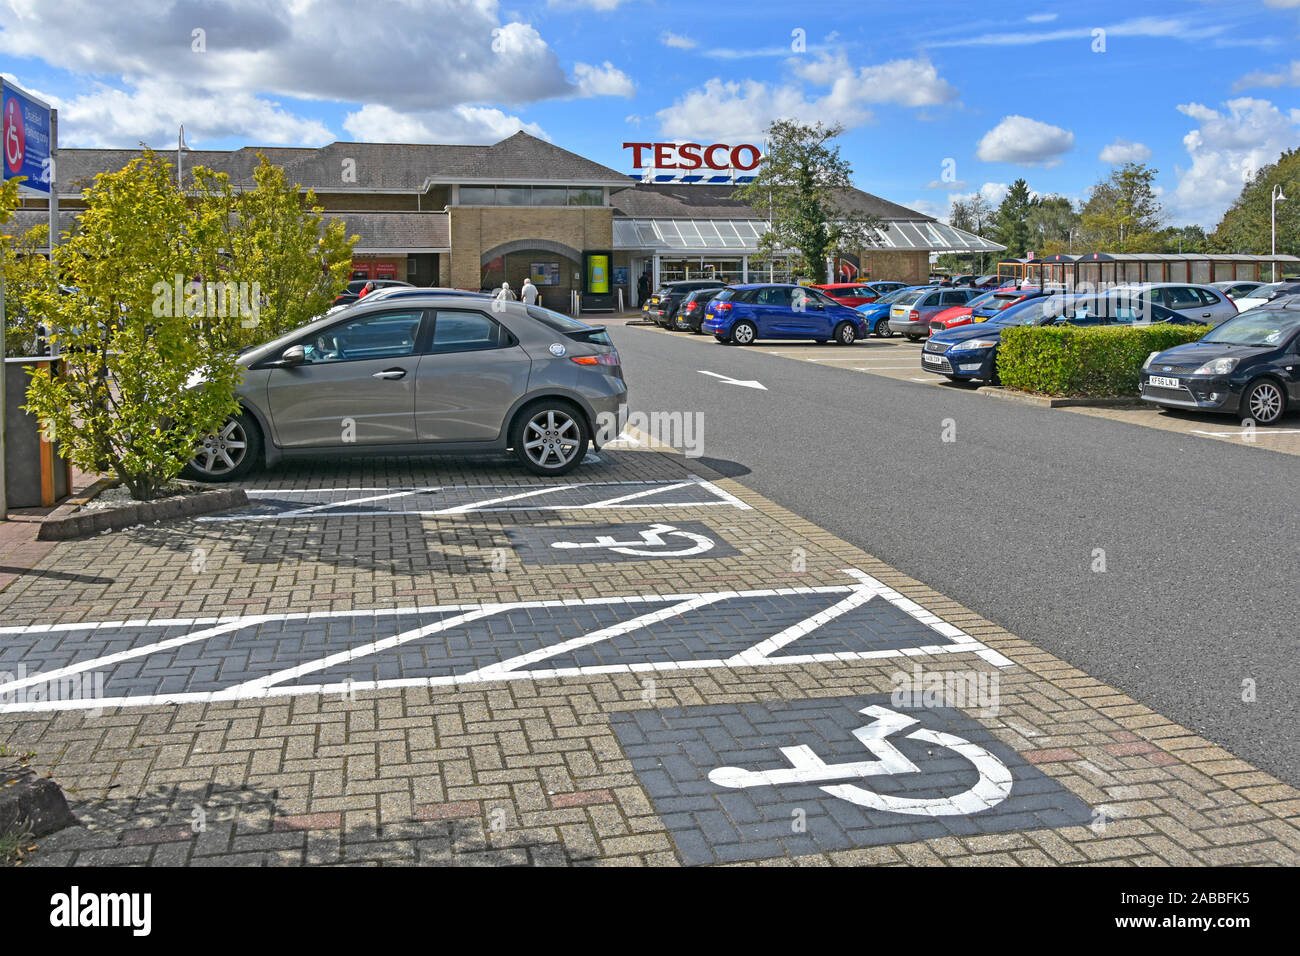 Behinderte Stellplatz Räumen bei Tesco Supermarkt Kundenparkplatz Symbole auf Block ebnet Stadt Ely, Cambridgeshire East Anglia England UK lackiert Stockfoto